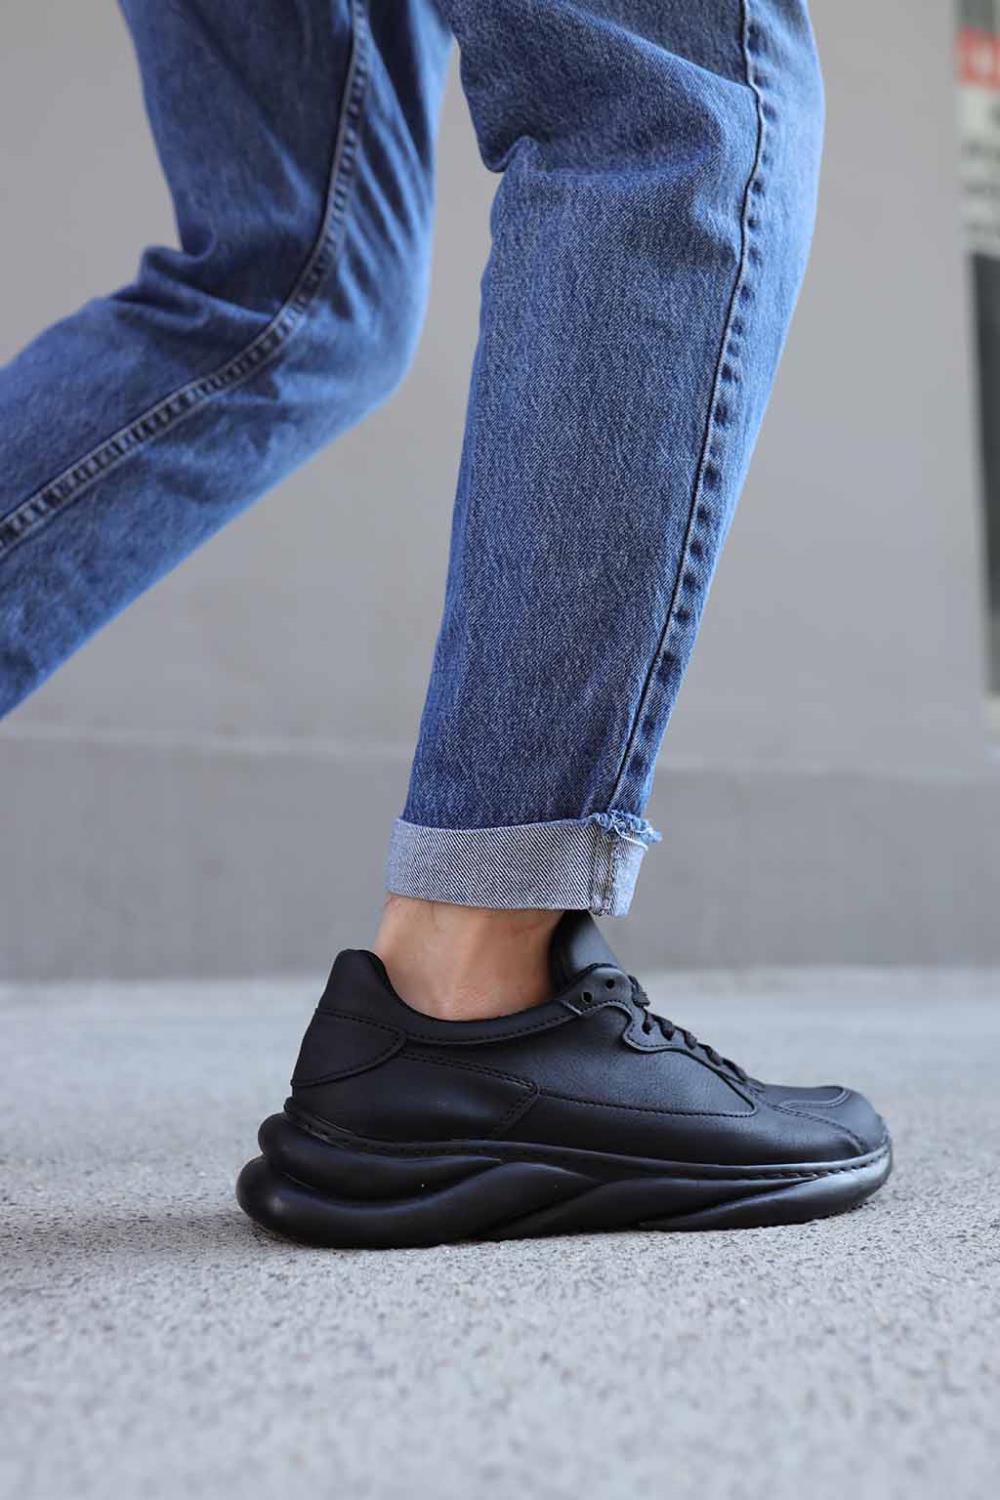 Men's Sneakers Shoes 065 Black (Black Sole) - STREETMODE ™